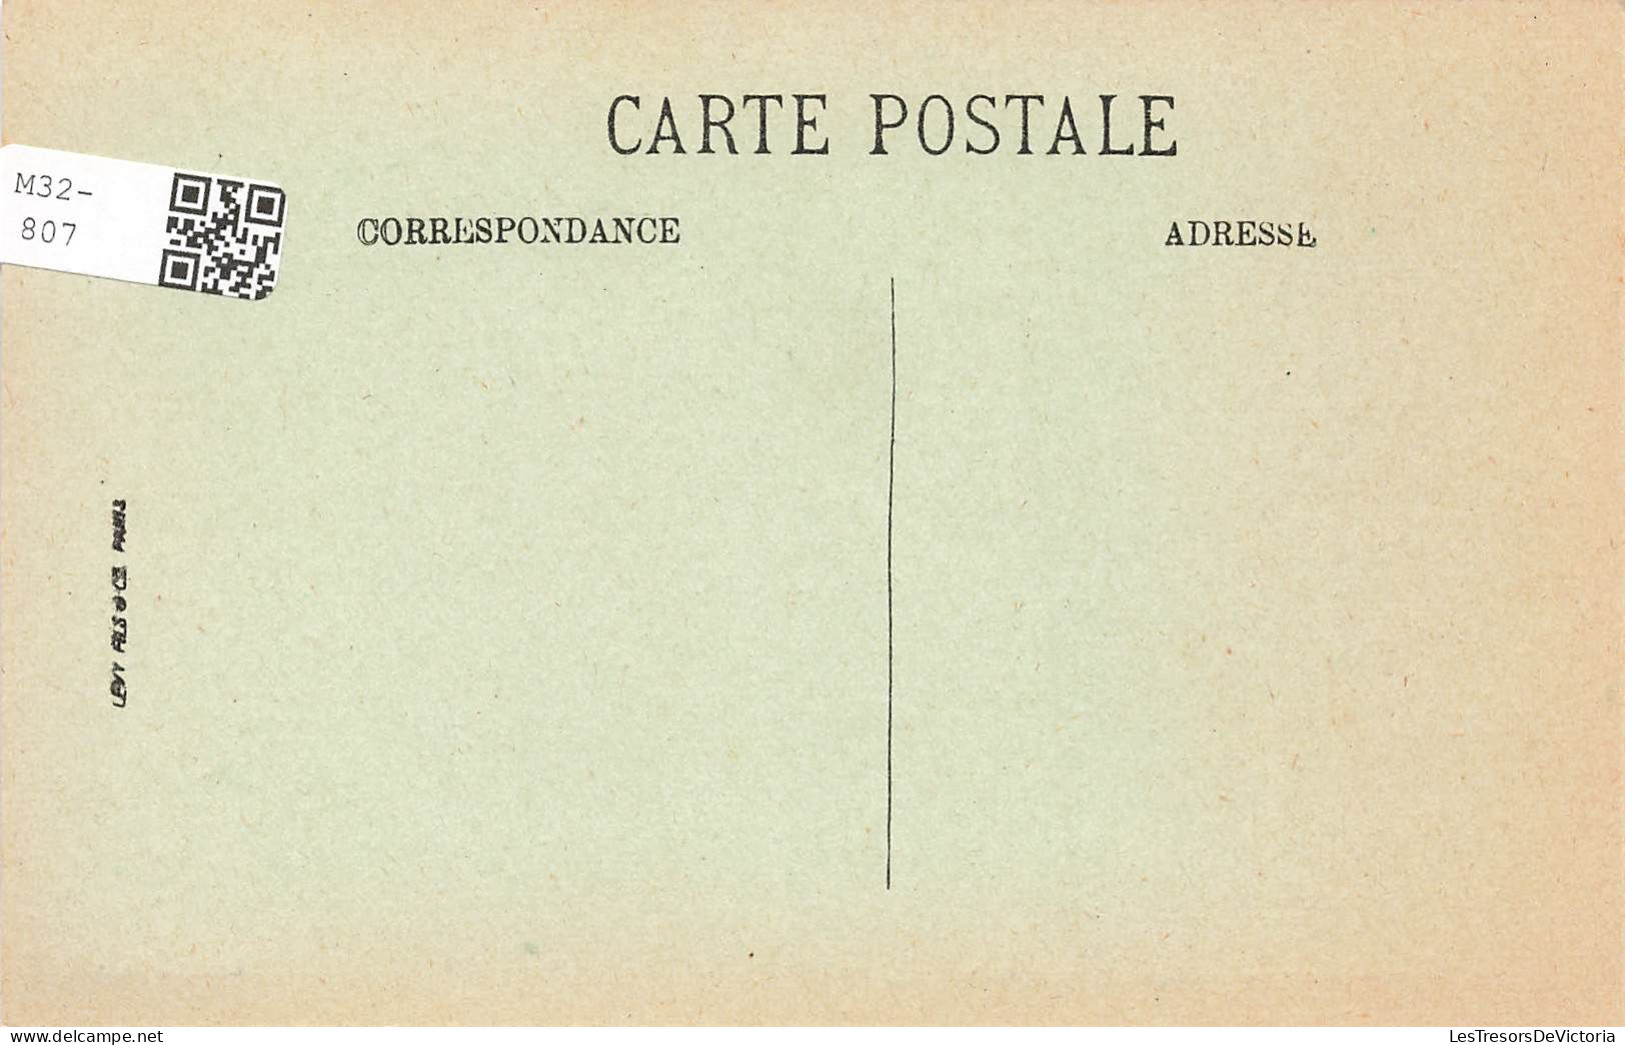 ALGÉRIE - Tiaret - Marabout De La Smala - Carte Postale Ancienne - Tiaret